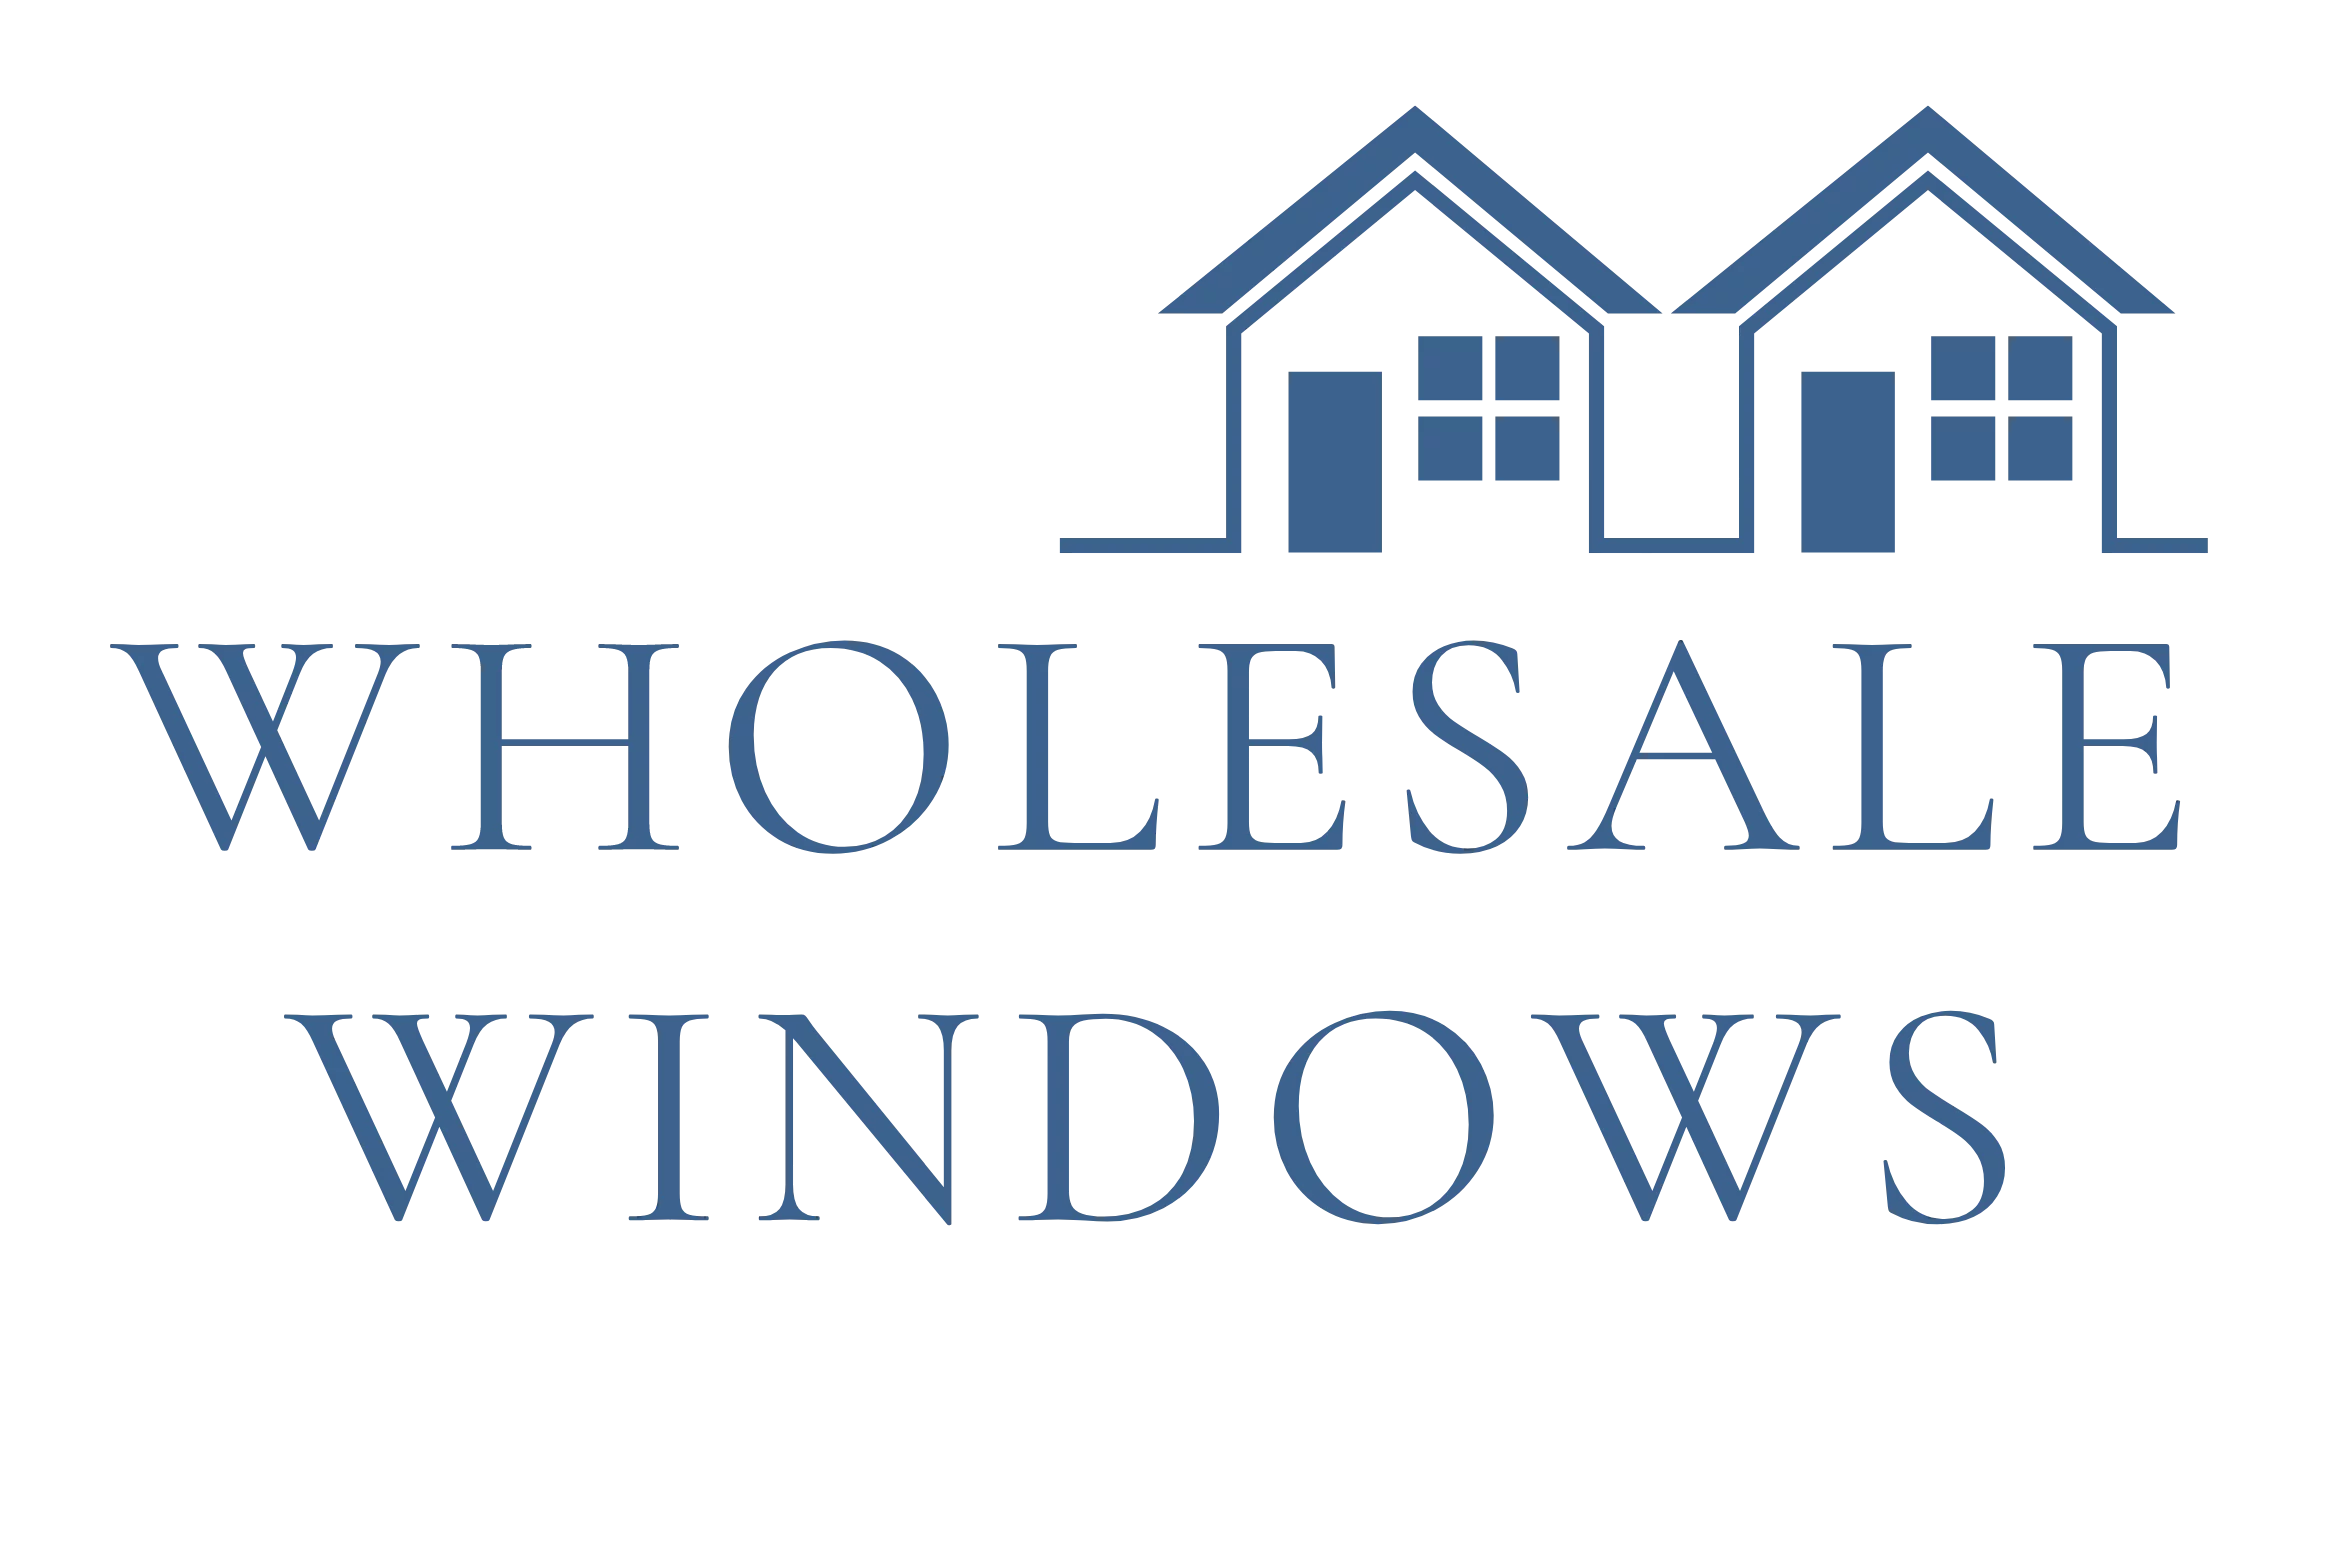 Wholesale Windows